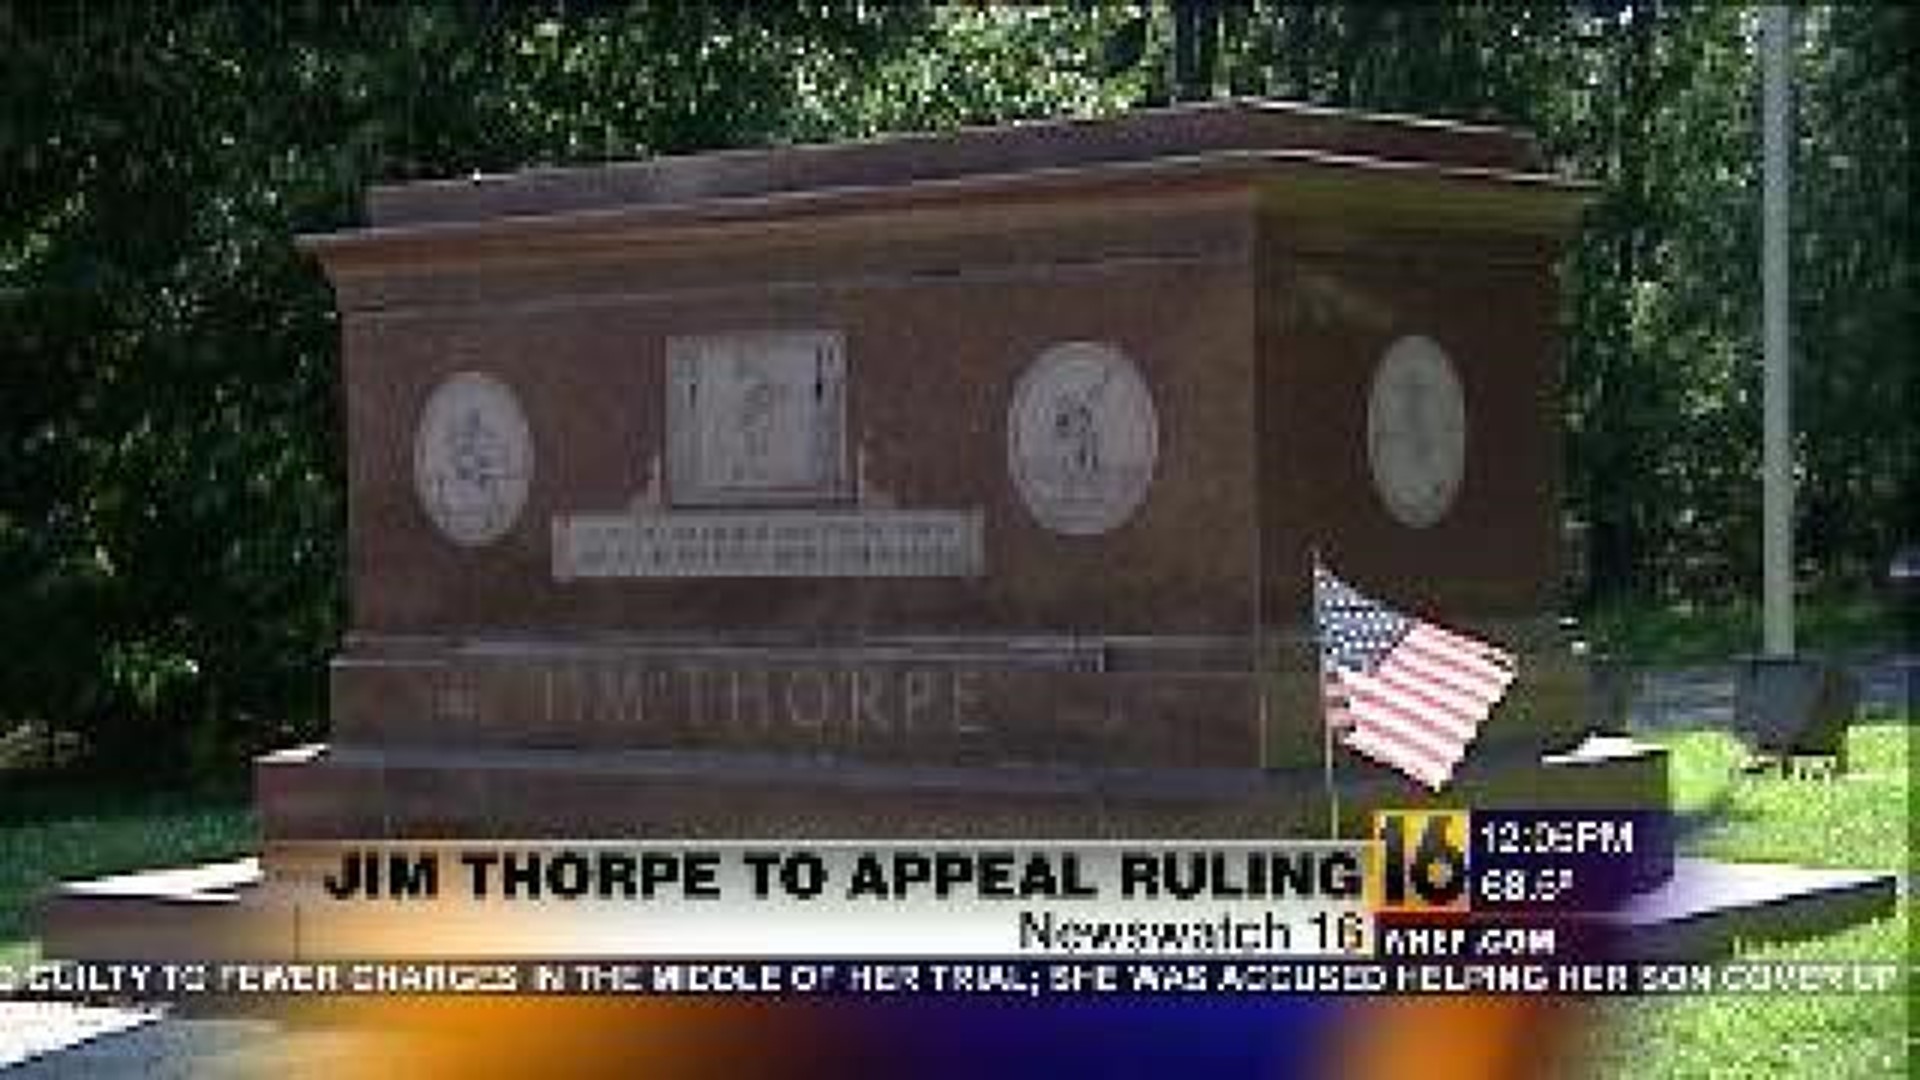 Borough Wants To Keep Jim Thorpe's Body